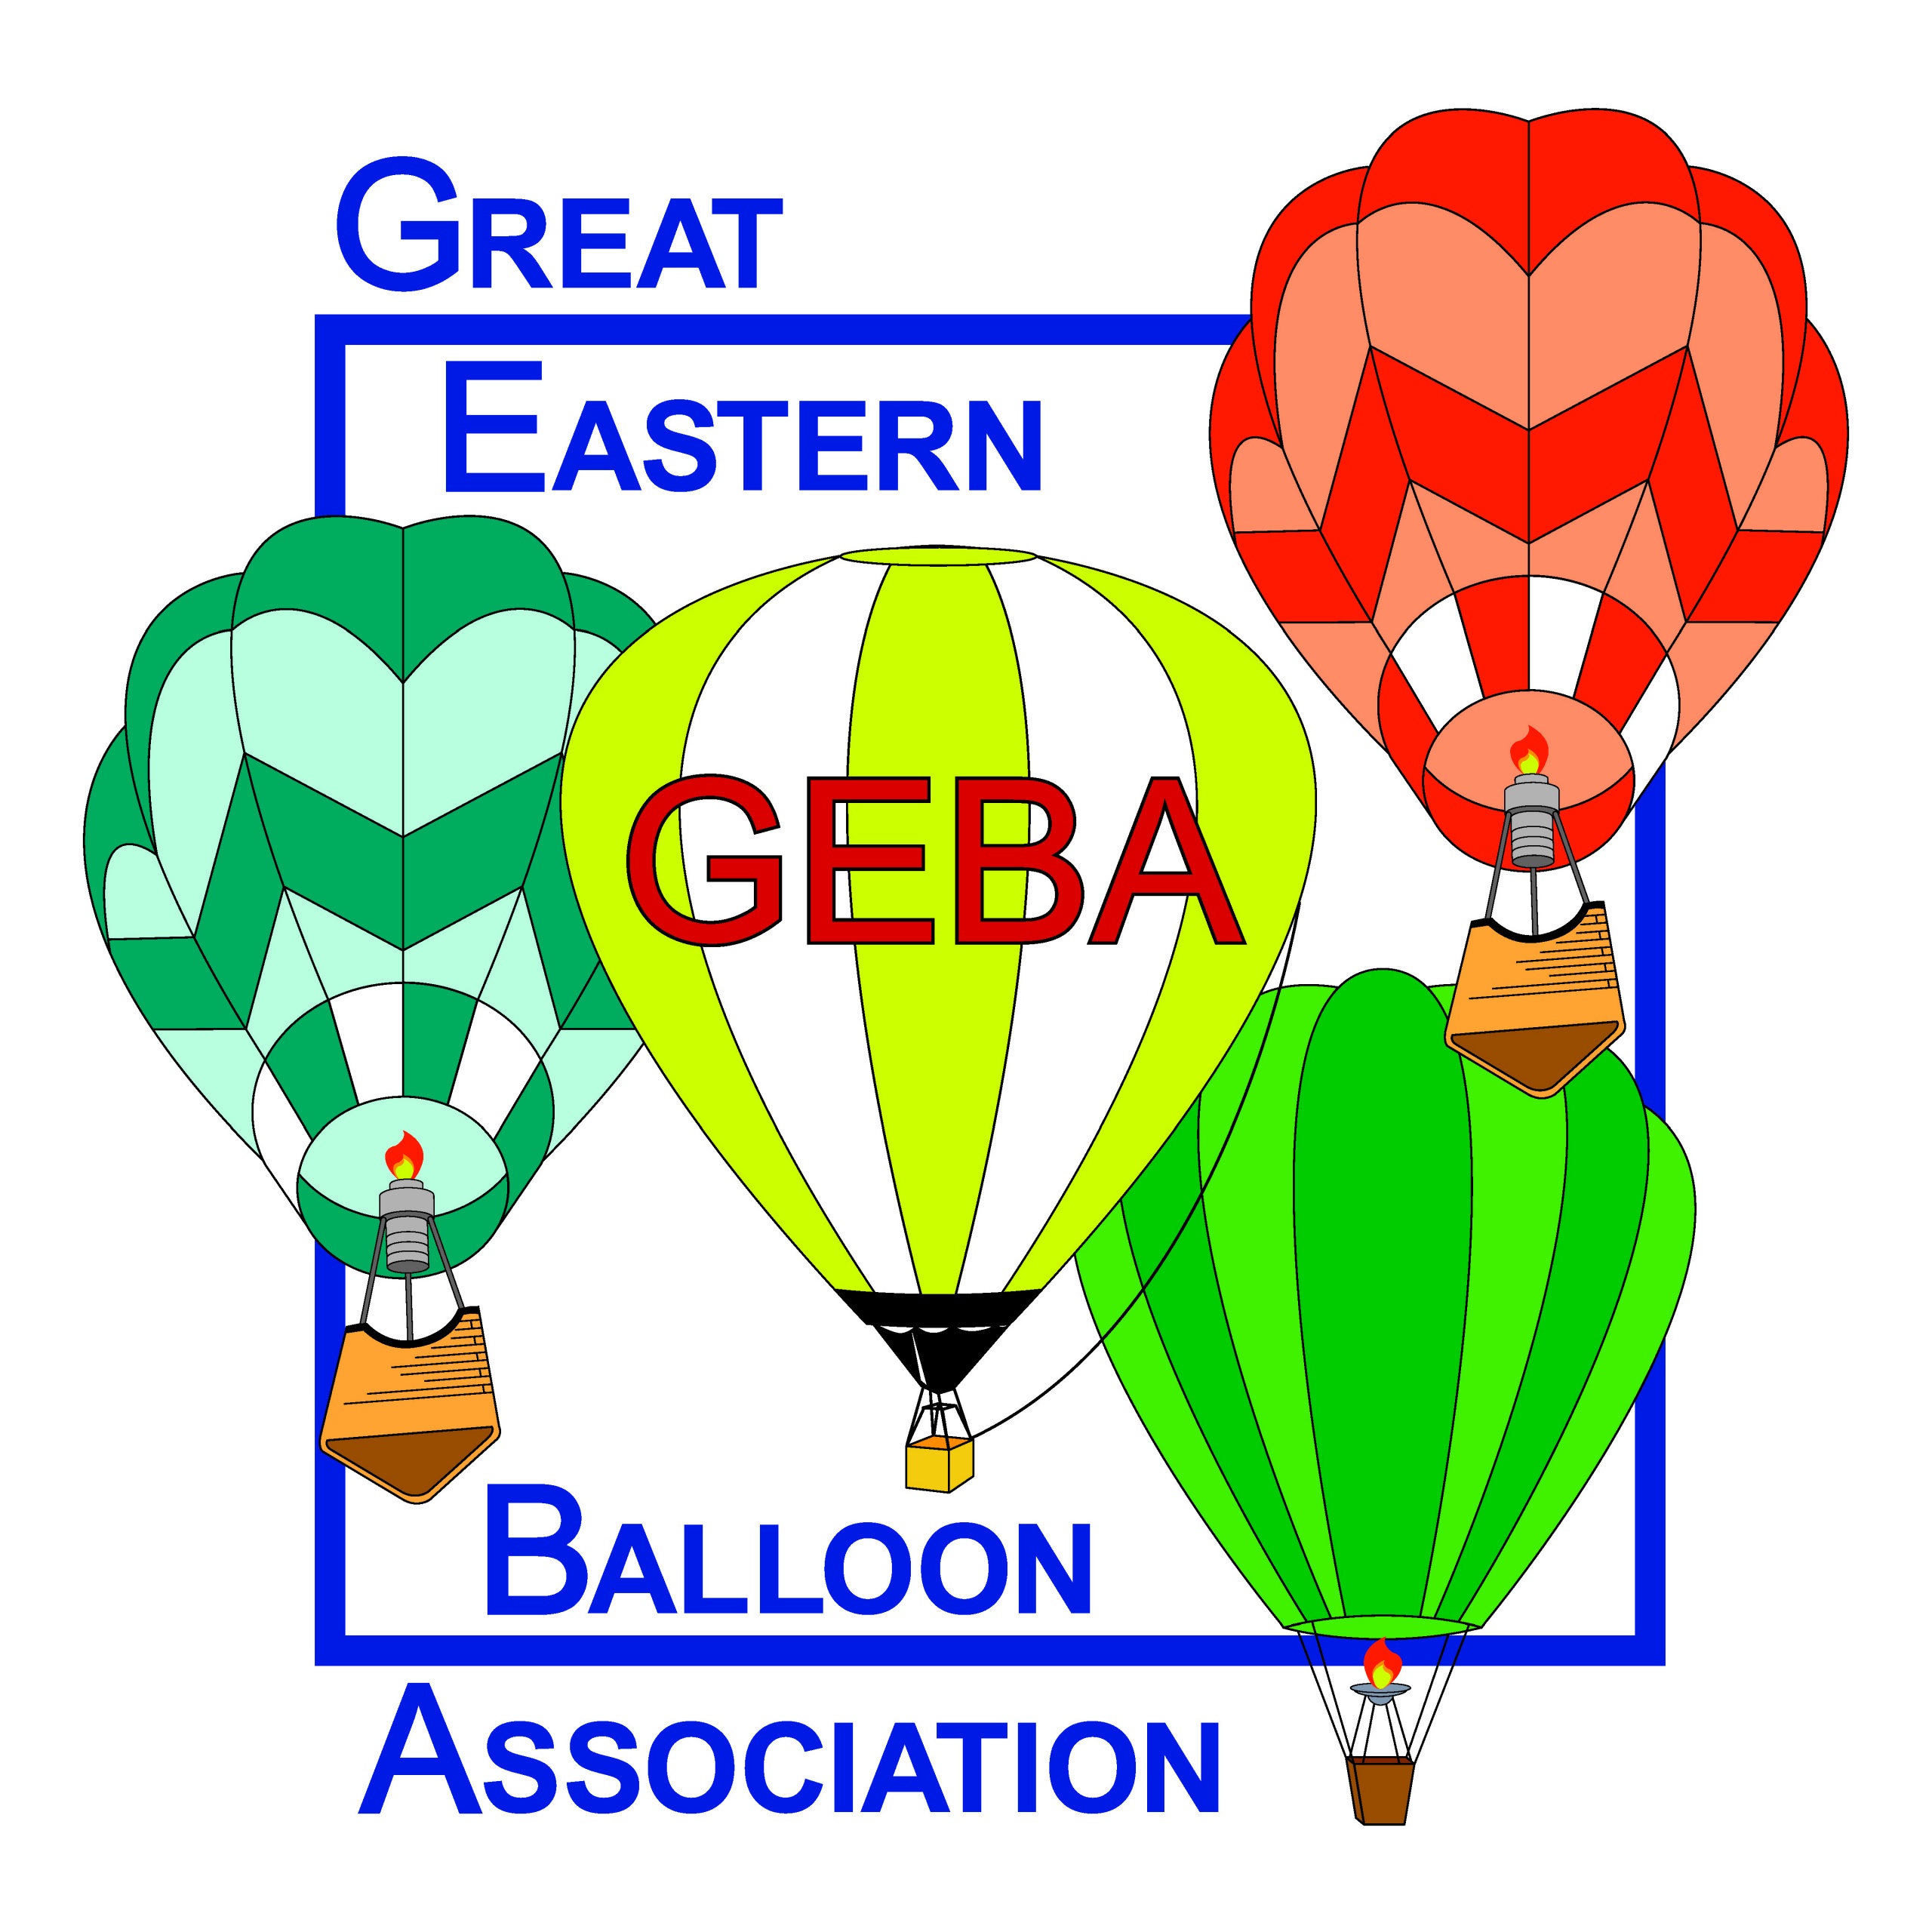 Great Eastern Balloon Association